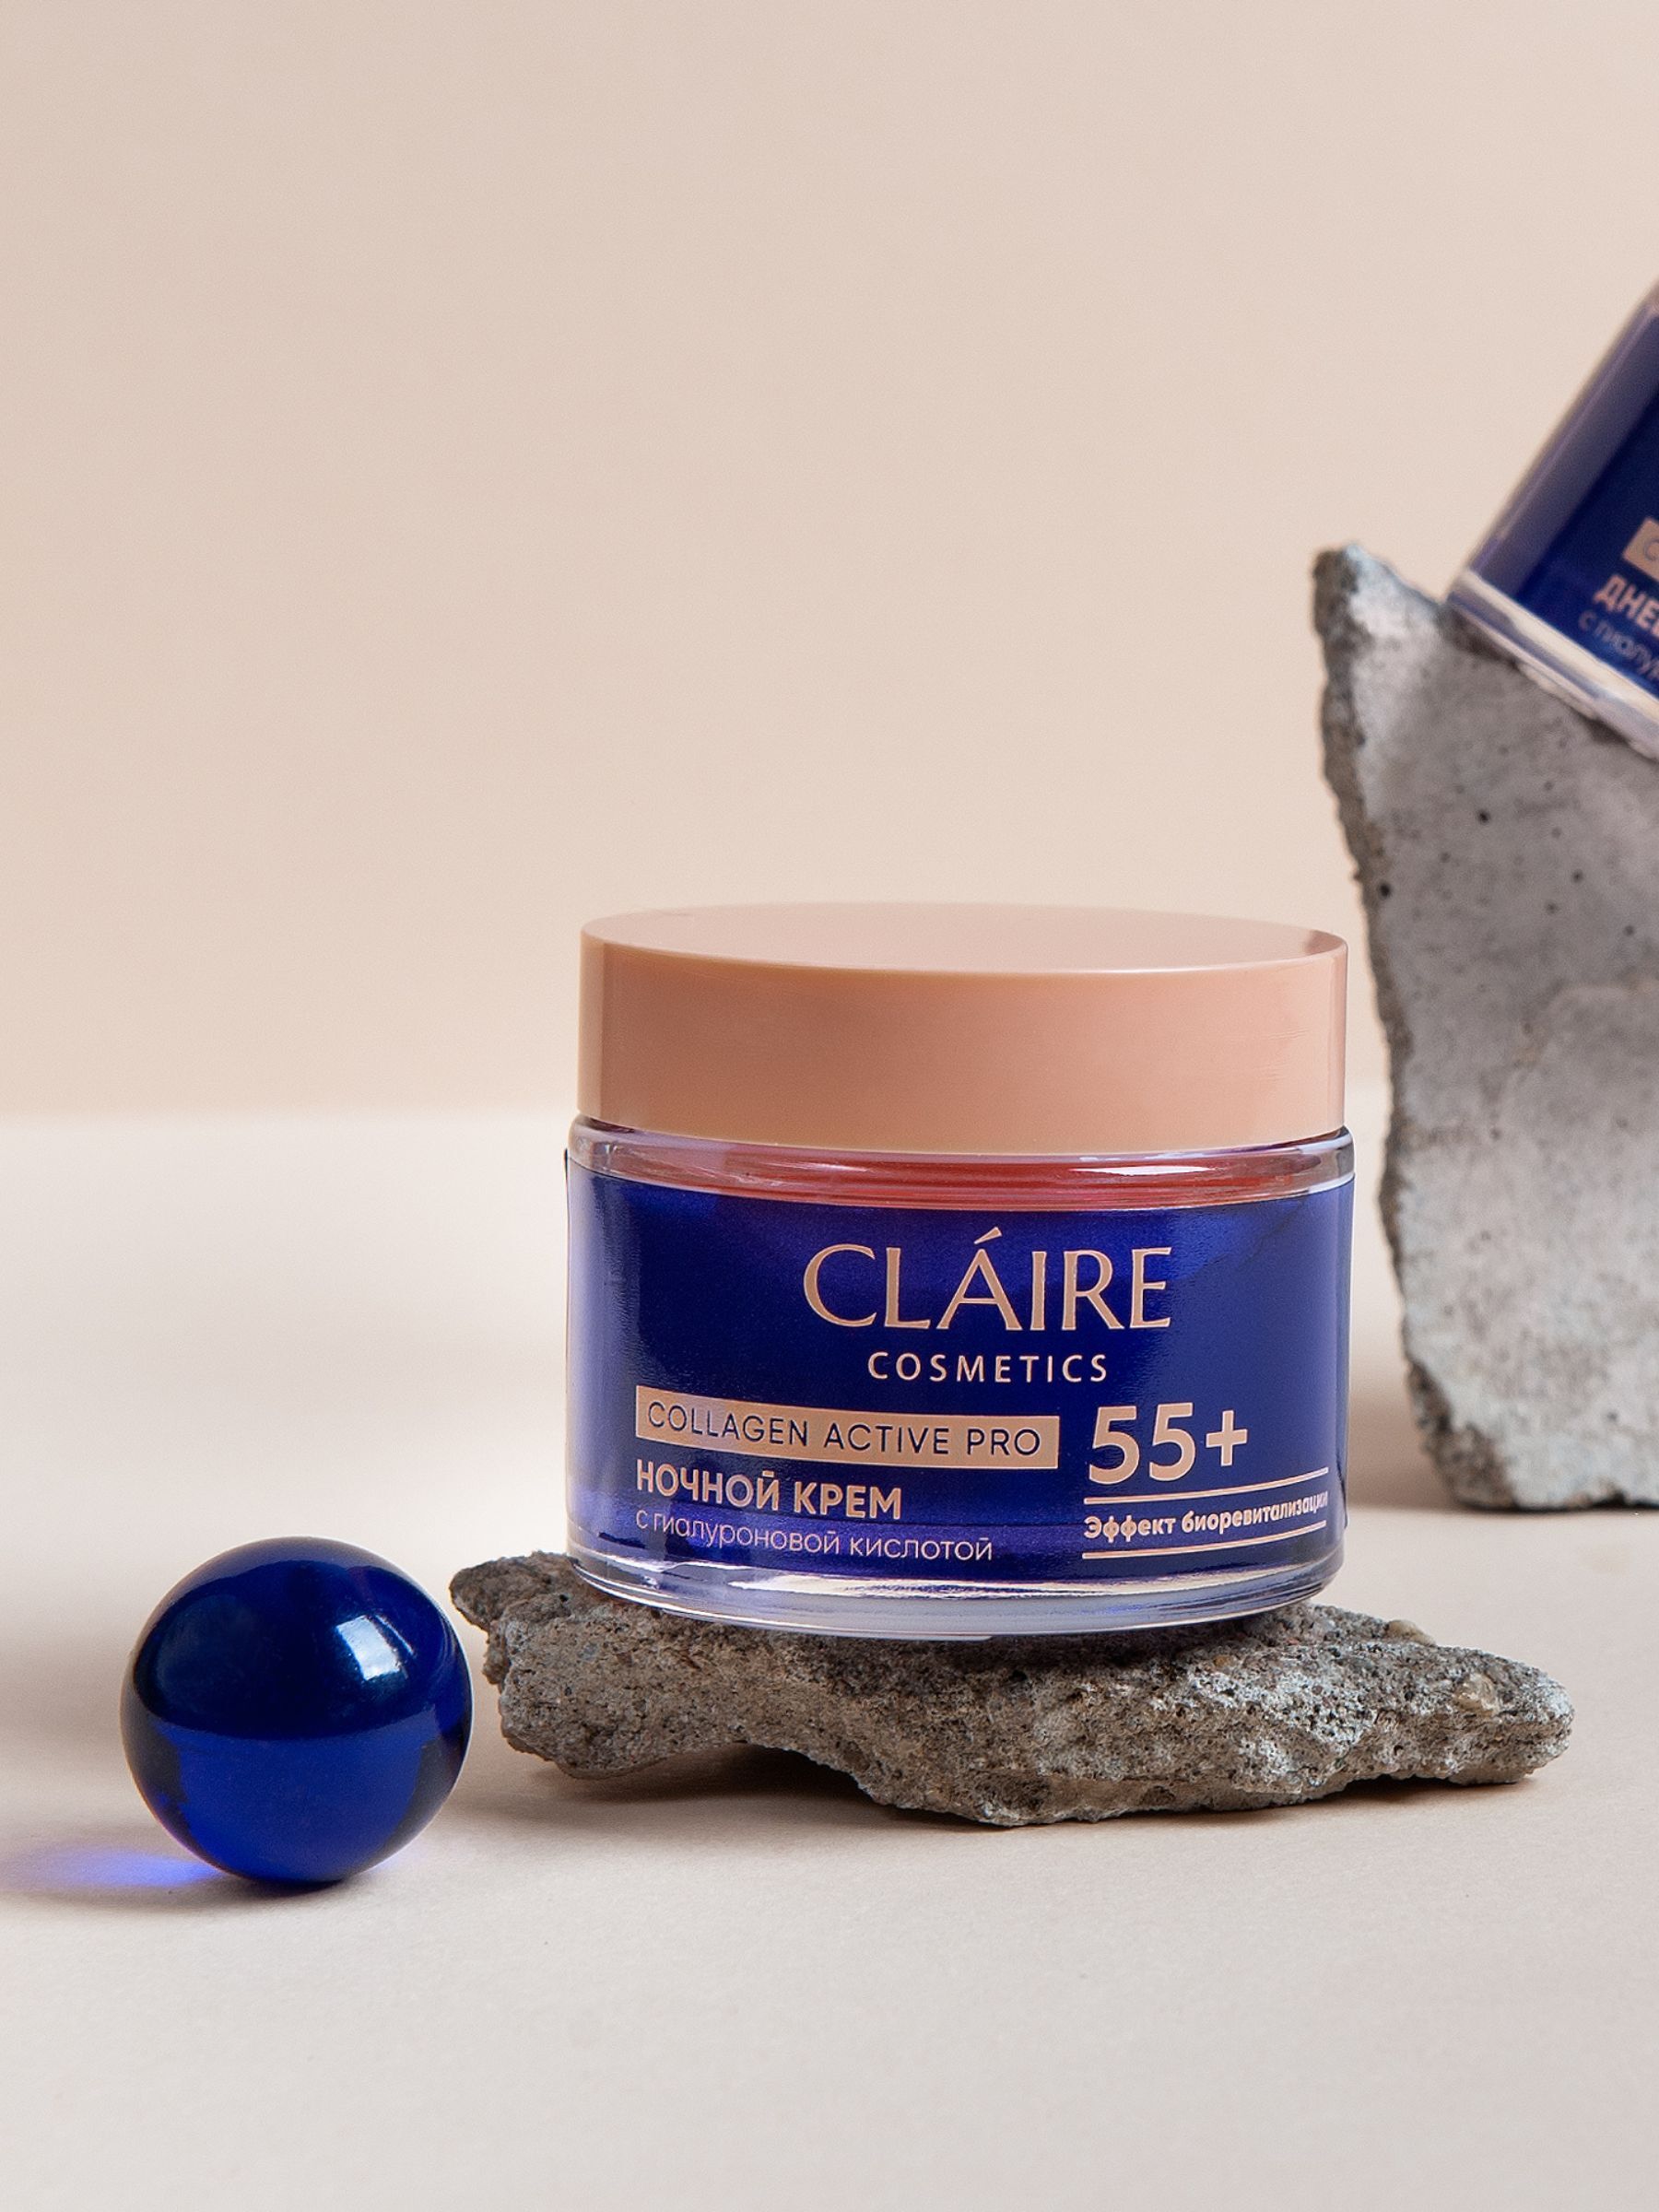 Claire Cosmetics Collagen Active Pro. Claire Collagen Active Pro 35+ крем ночной 50мл. Коллаген в косметике. Бренд Claire Cosmetics.